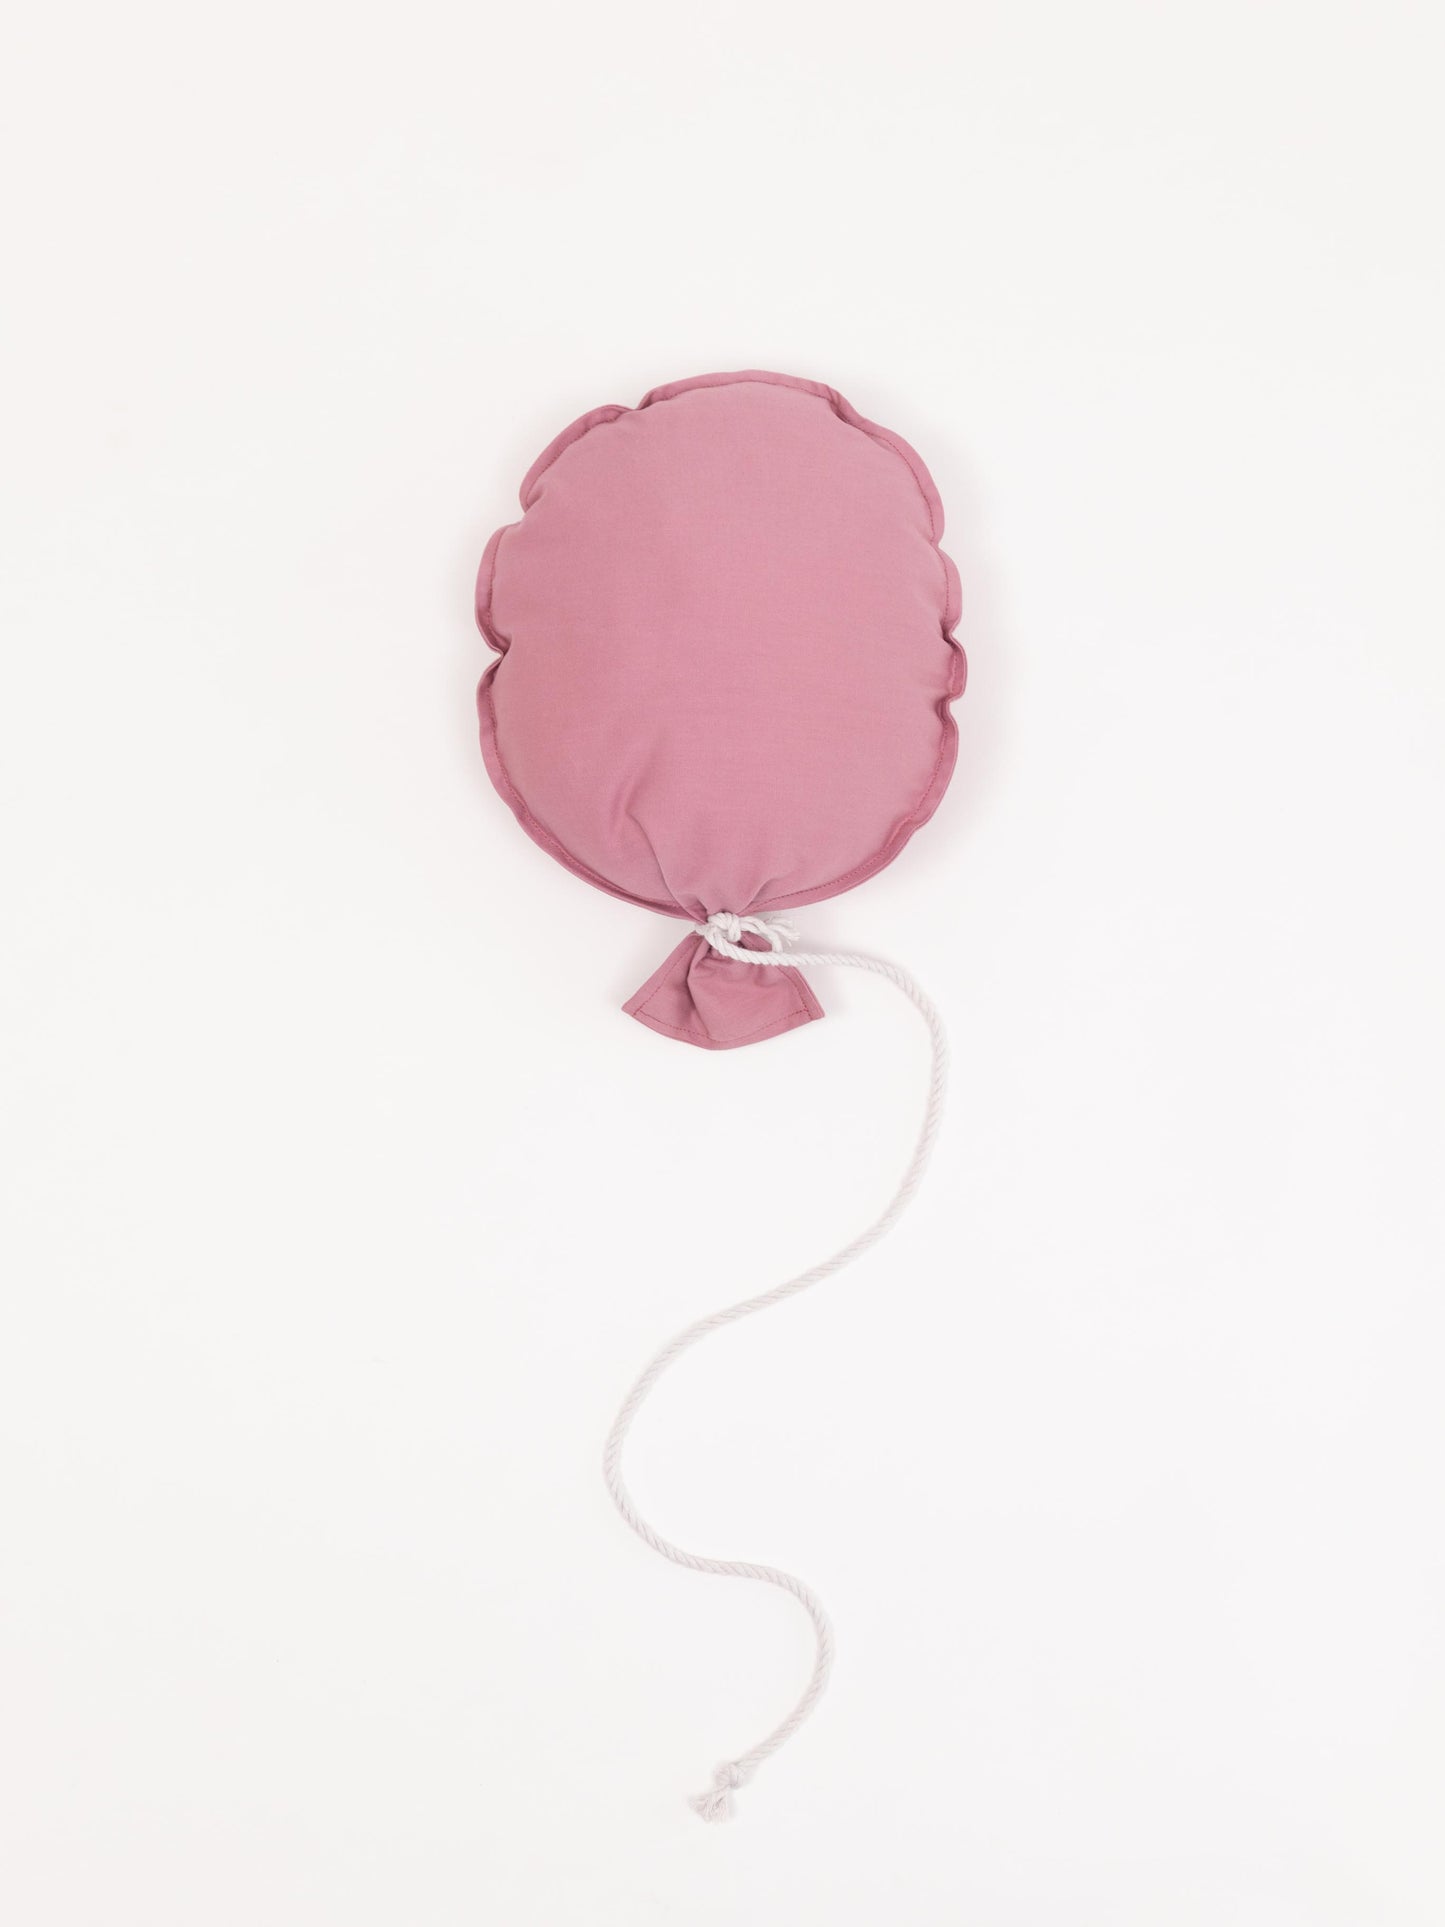 Kinderzimmer Wanddeko 'Stoff-Luftballon' Violett handmade